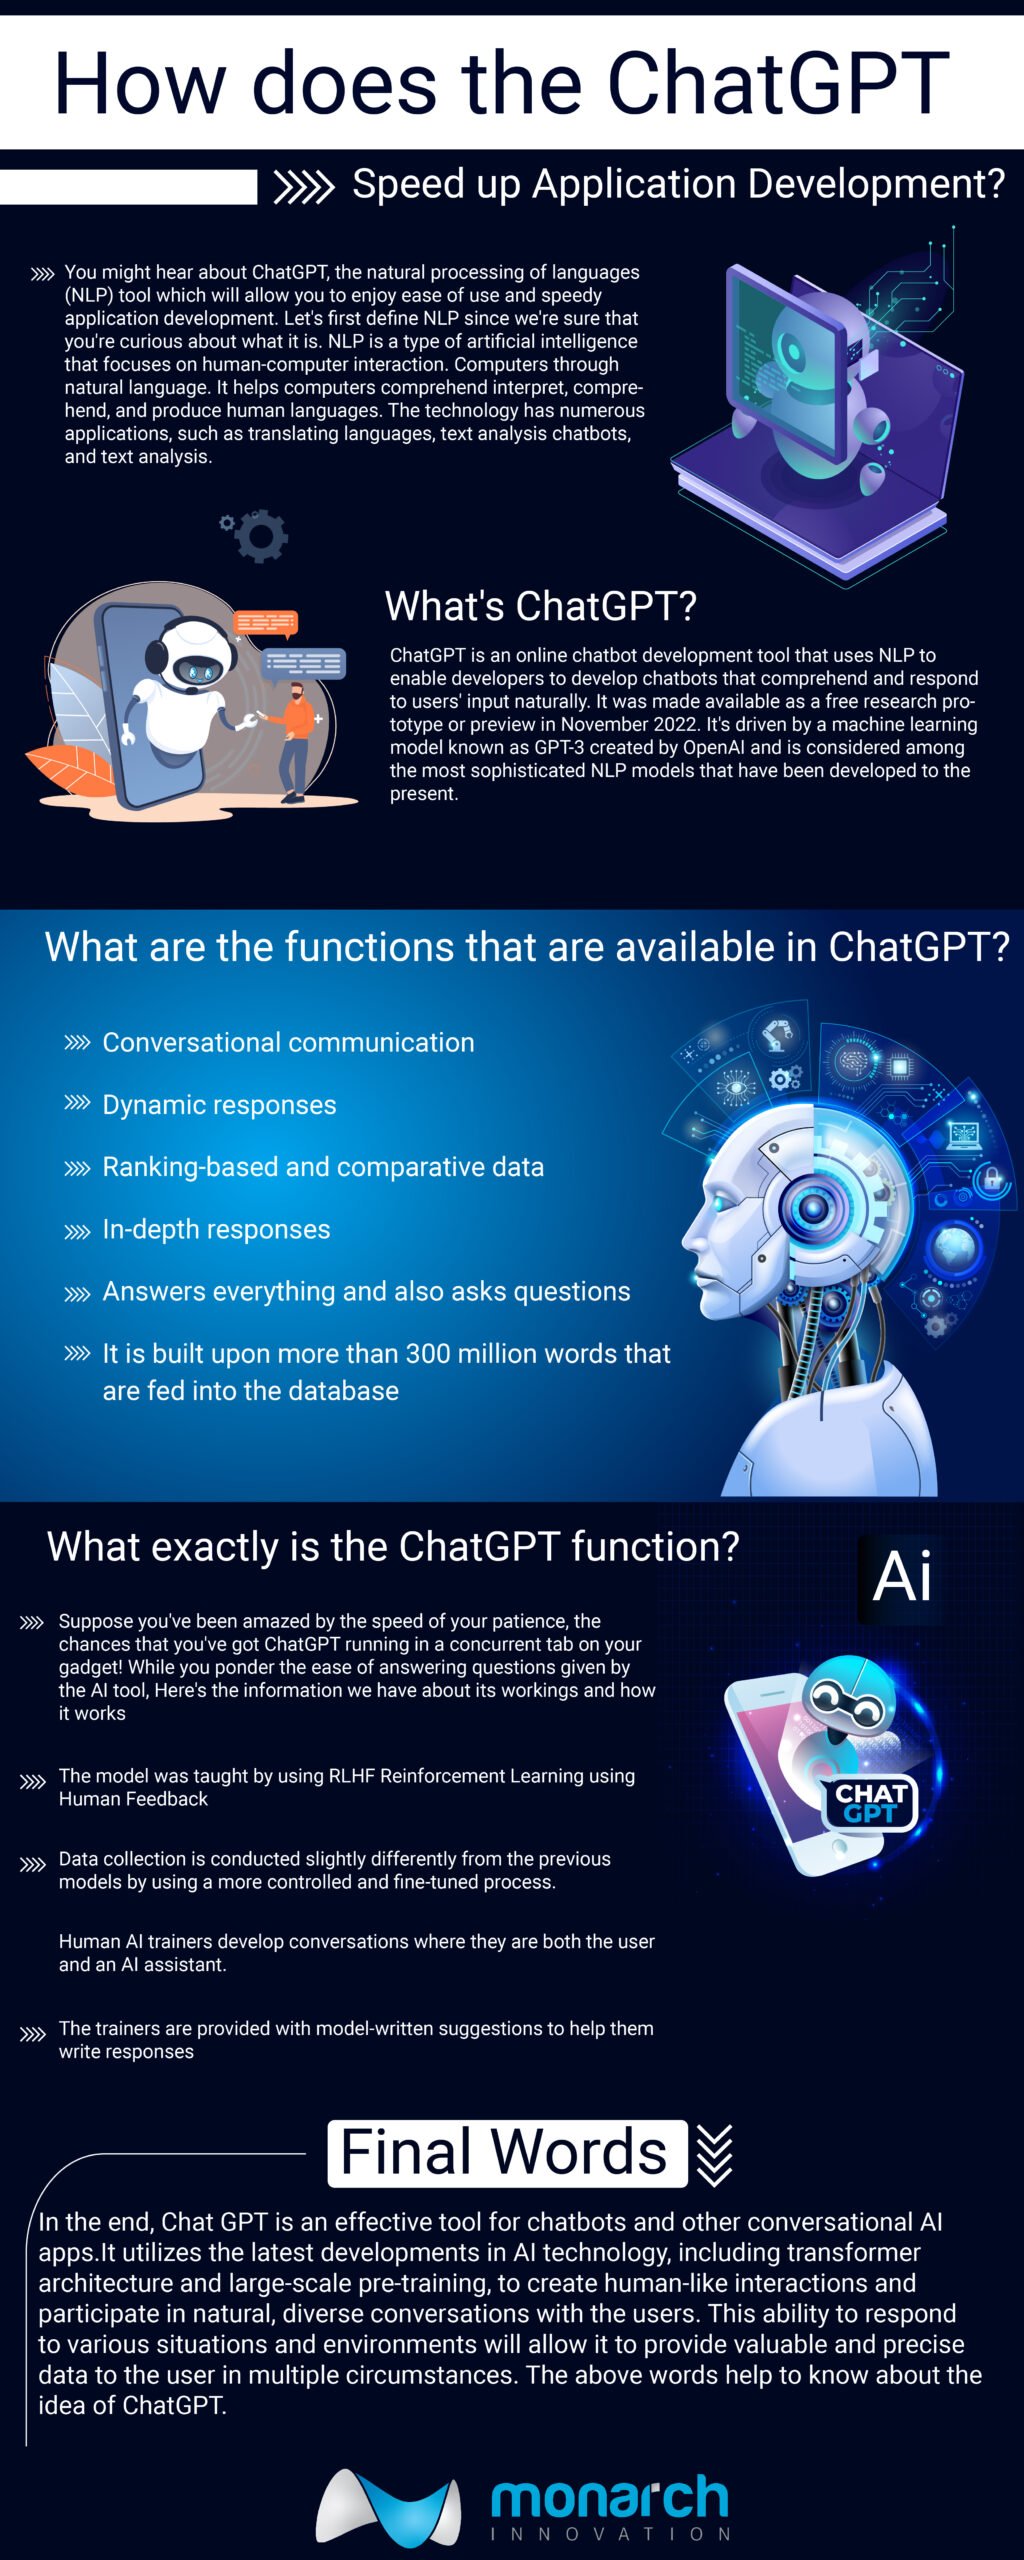 ChatGPT speed up Application Development